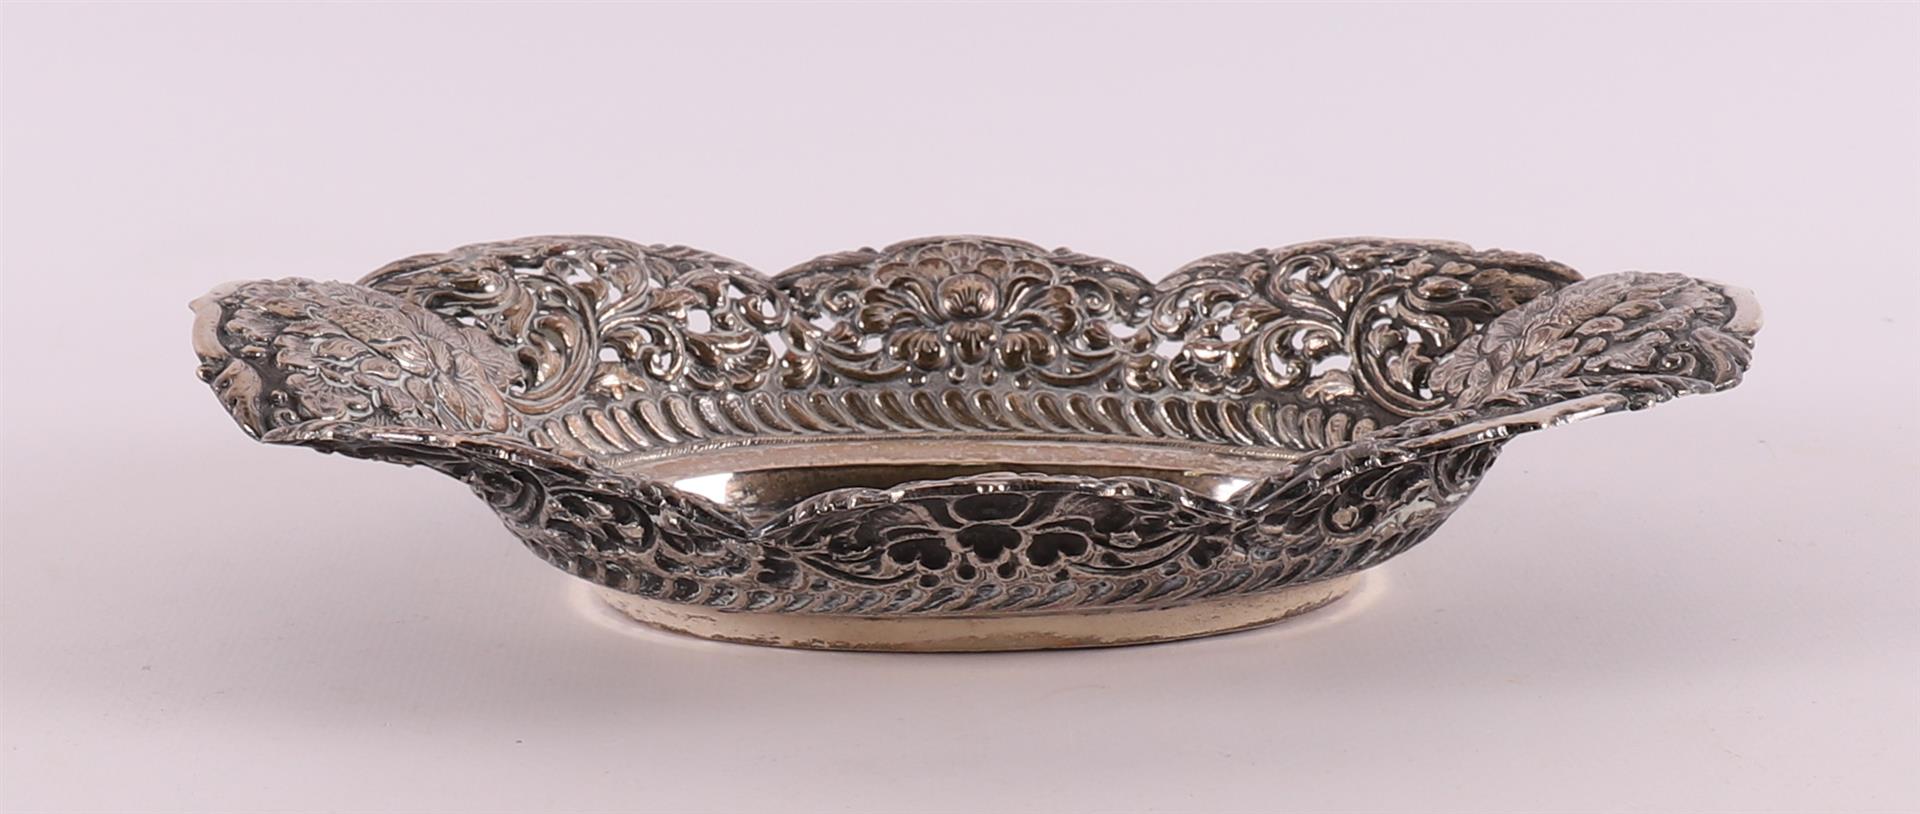 A Djokja 3rd grade 800/1000 silver oval bowl, 1st half 20th century. - Image 2 of 4